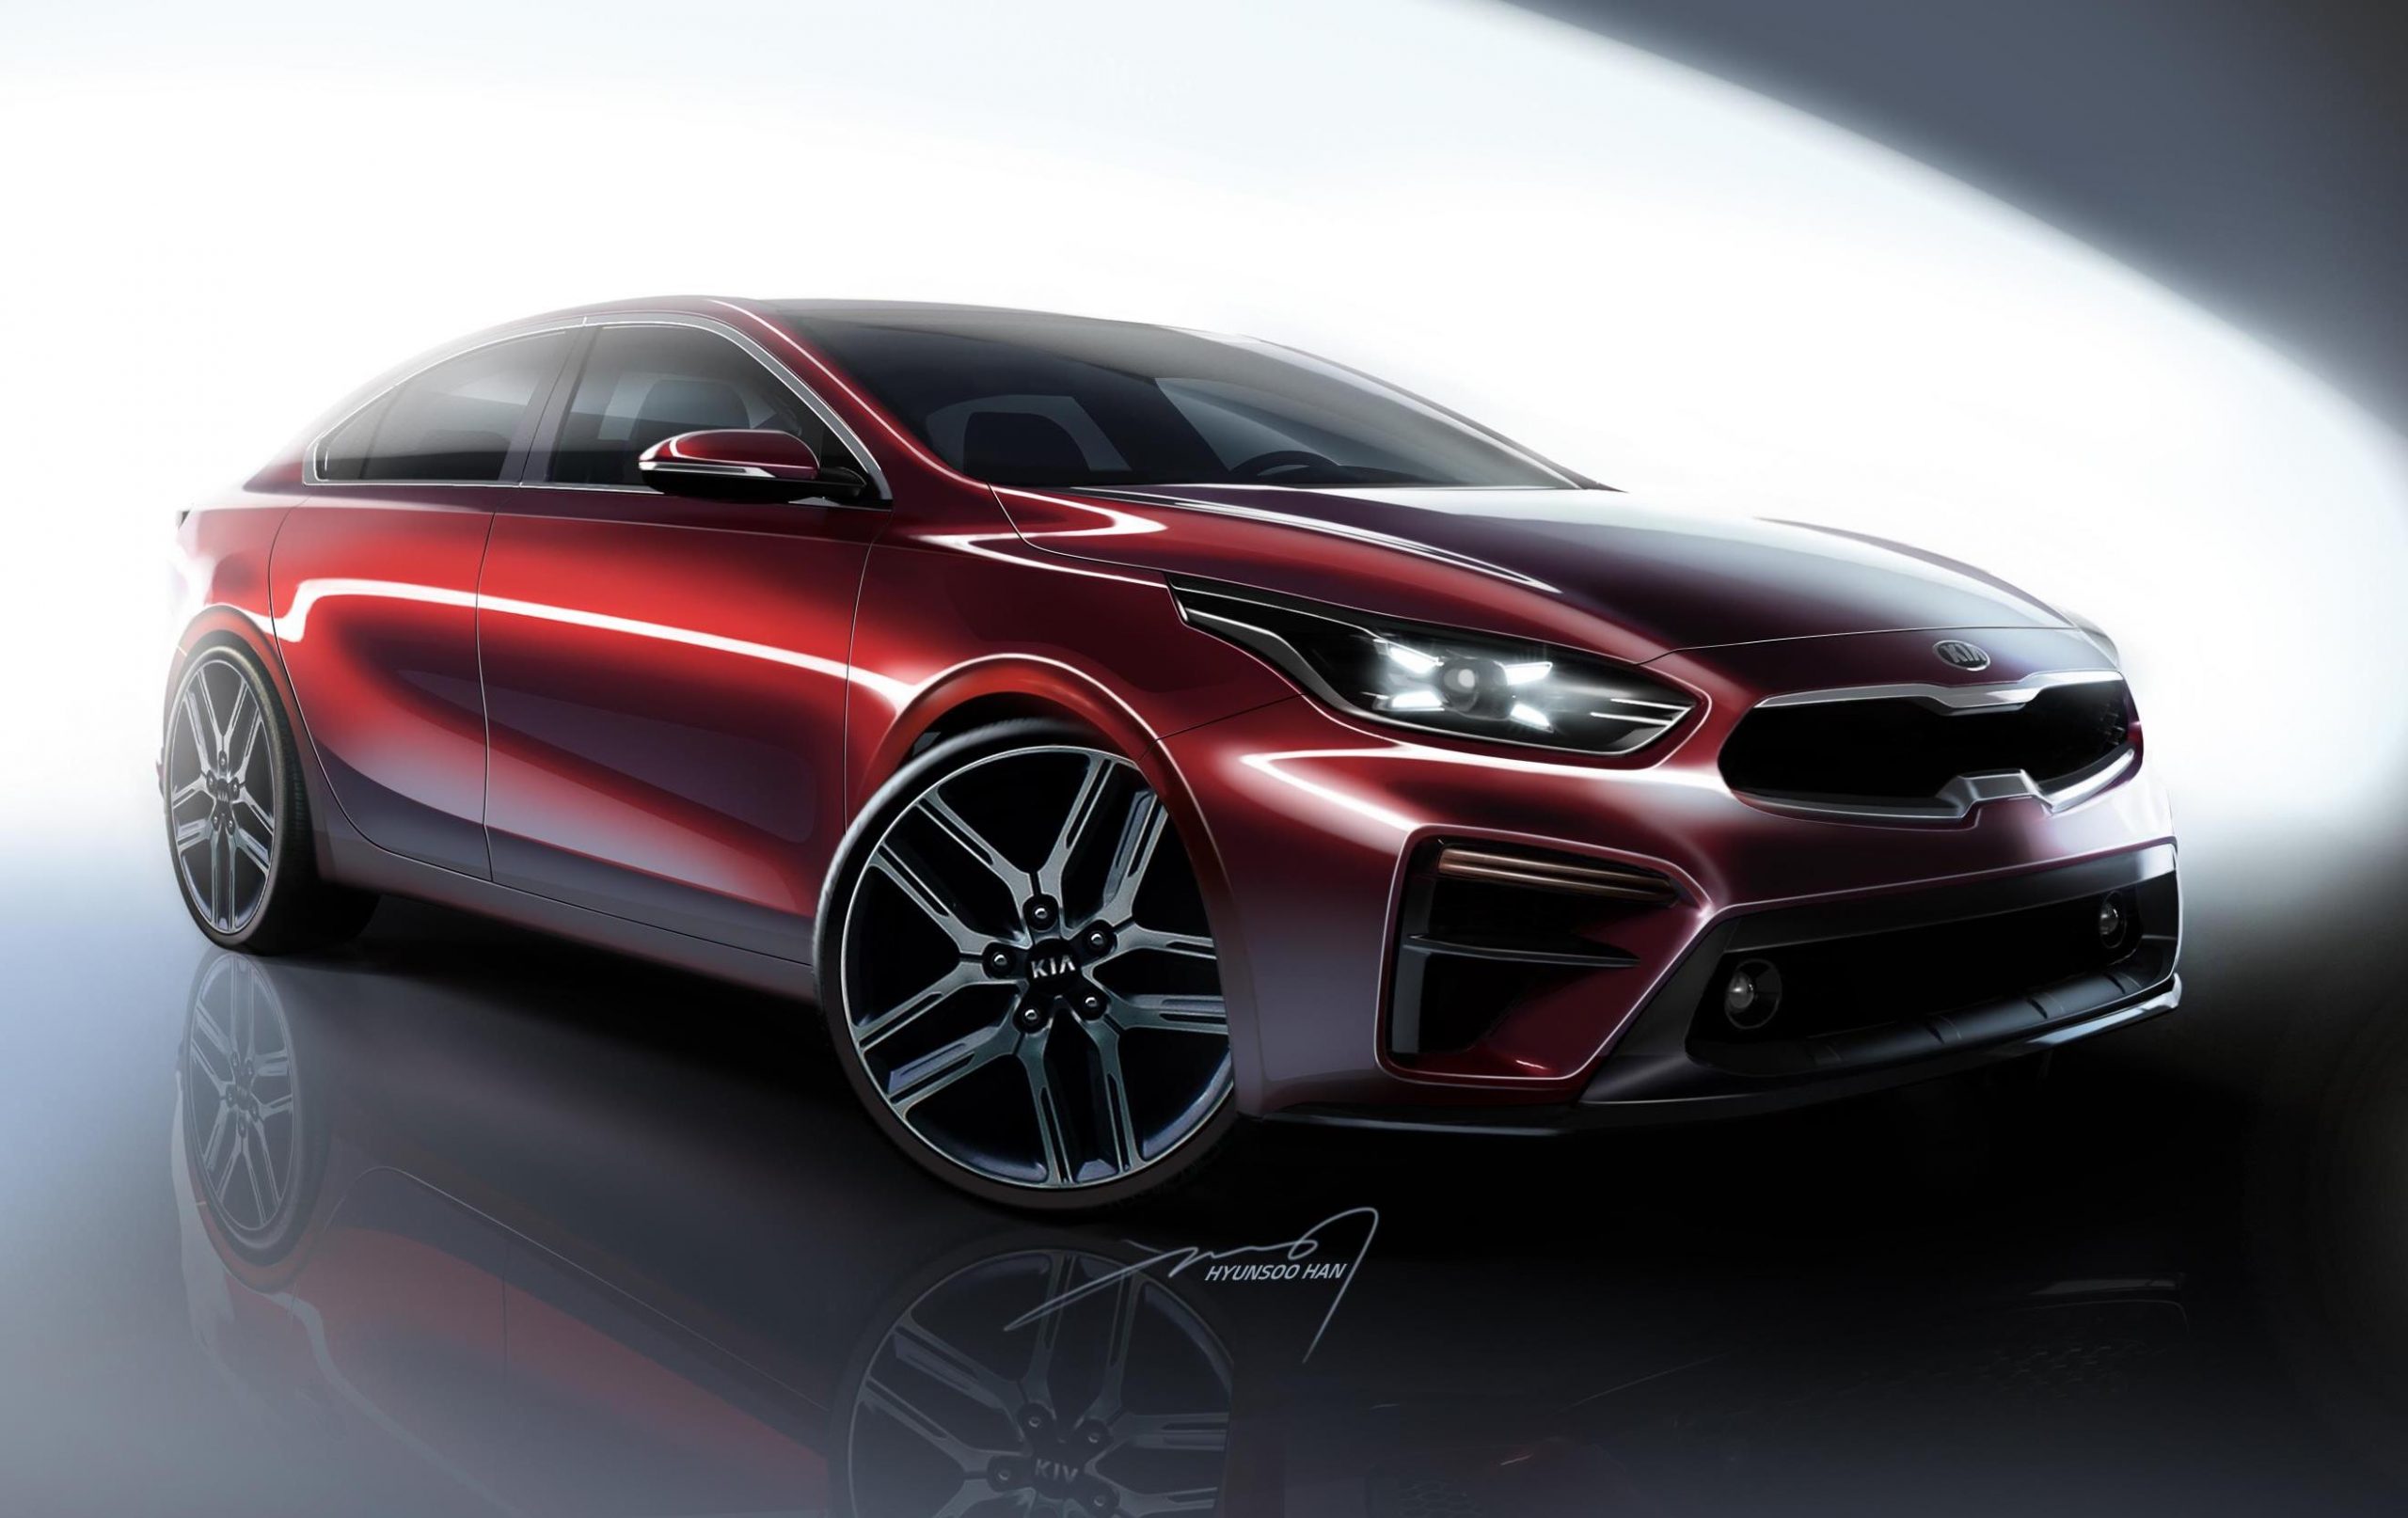 2018 Kia Cerato looks flash in official renderings